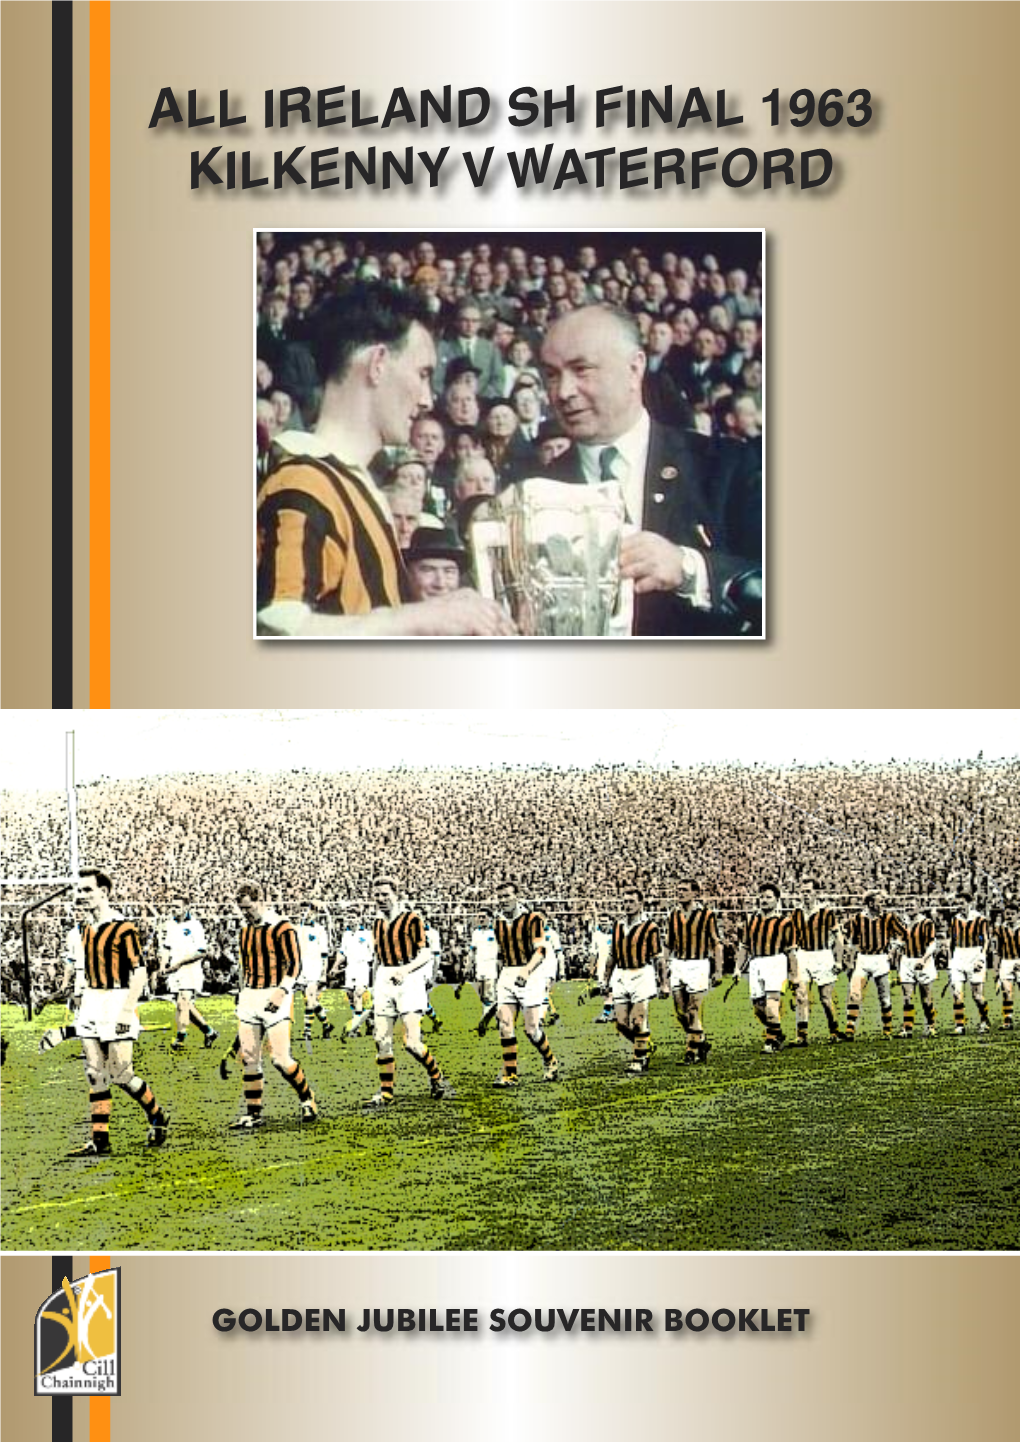 All Ireland Sh Final 1963 Kilkenny V Waterford